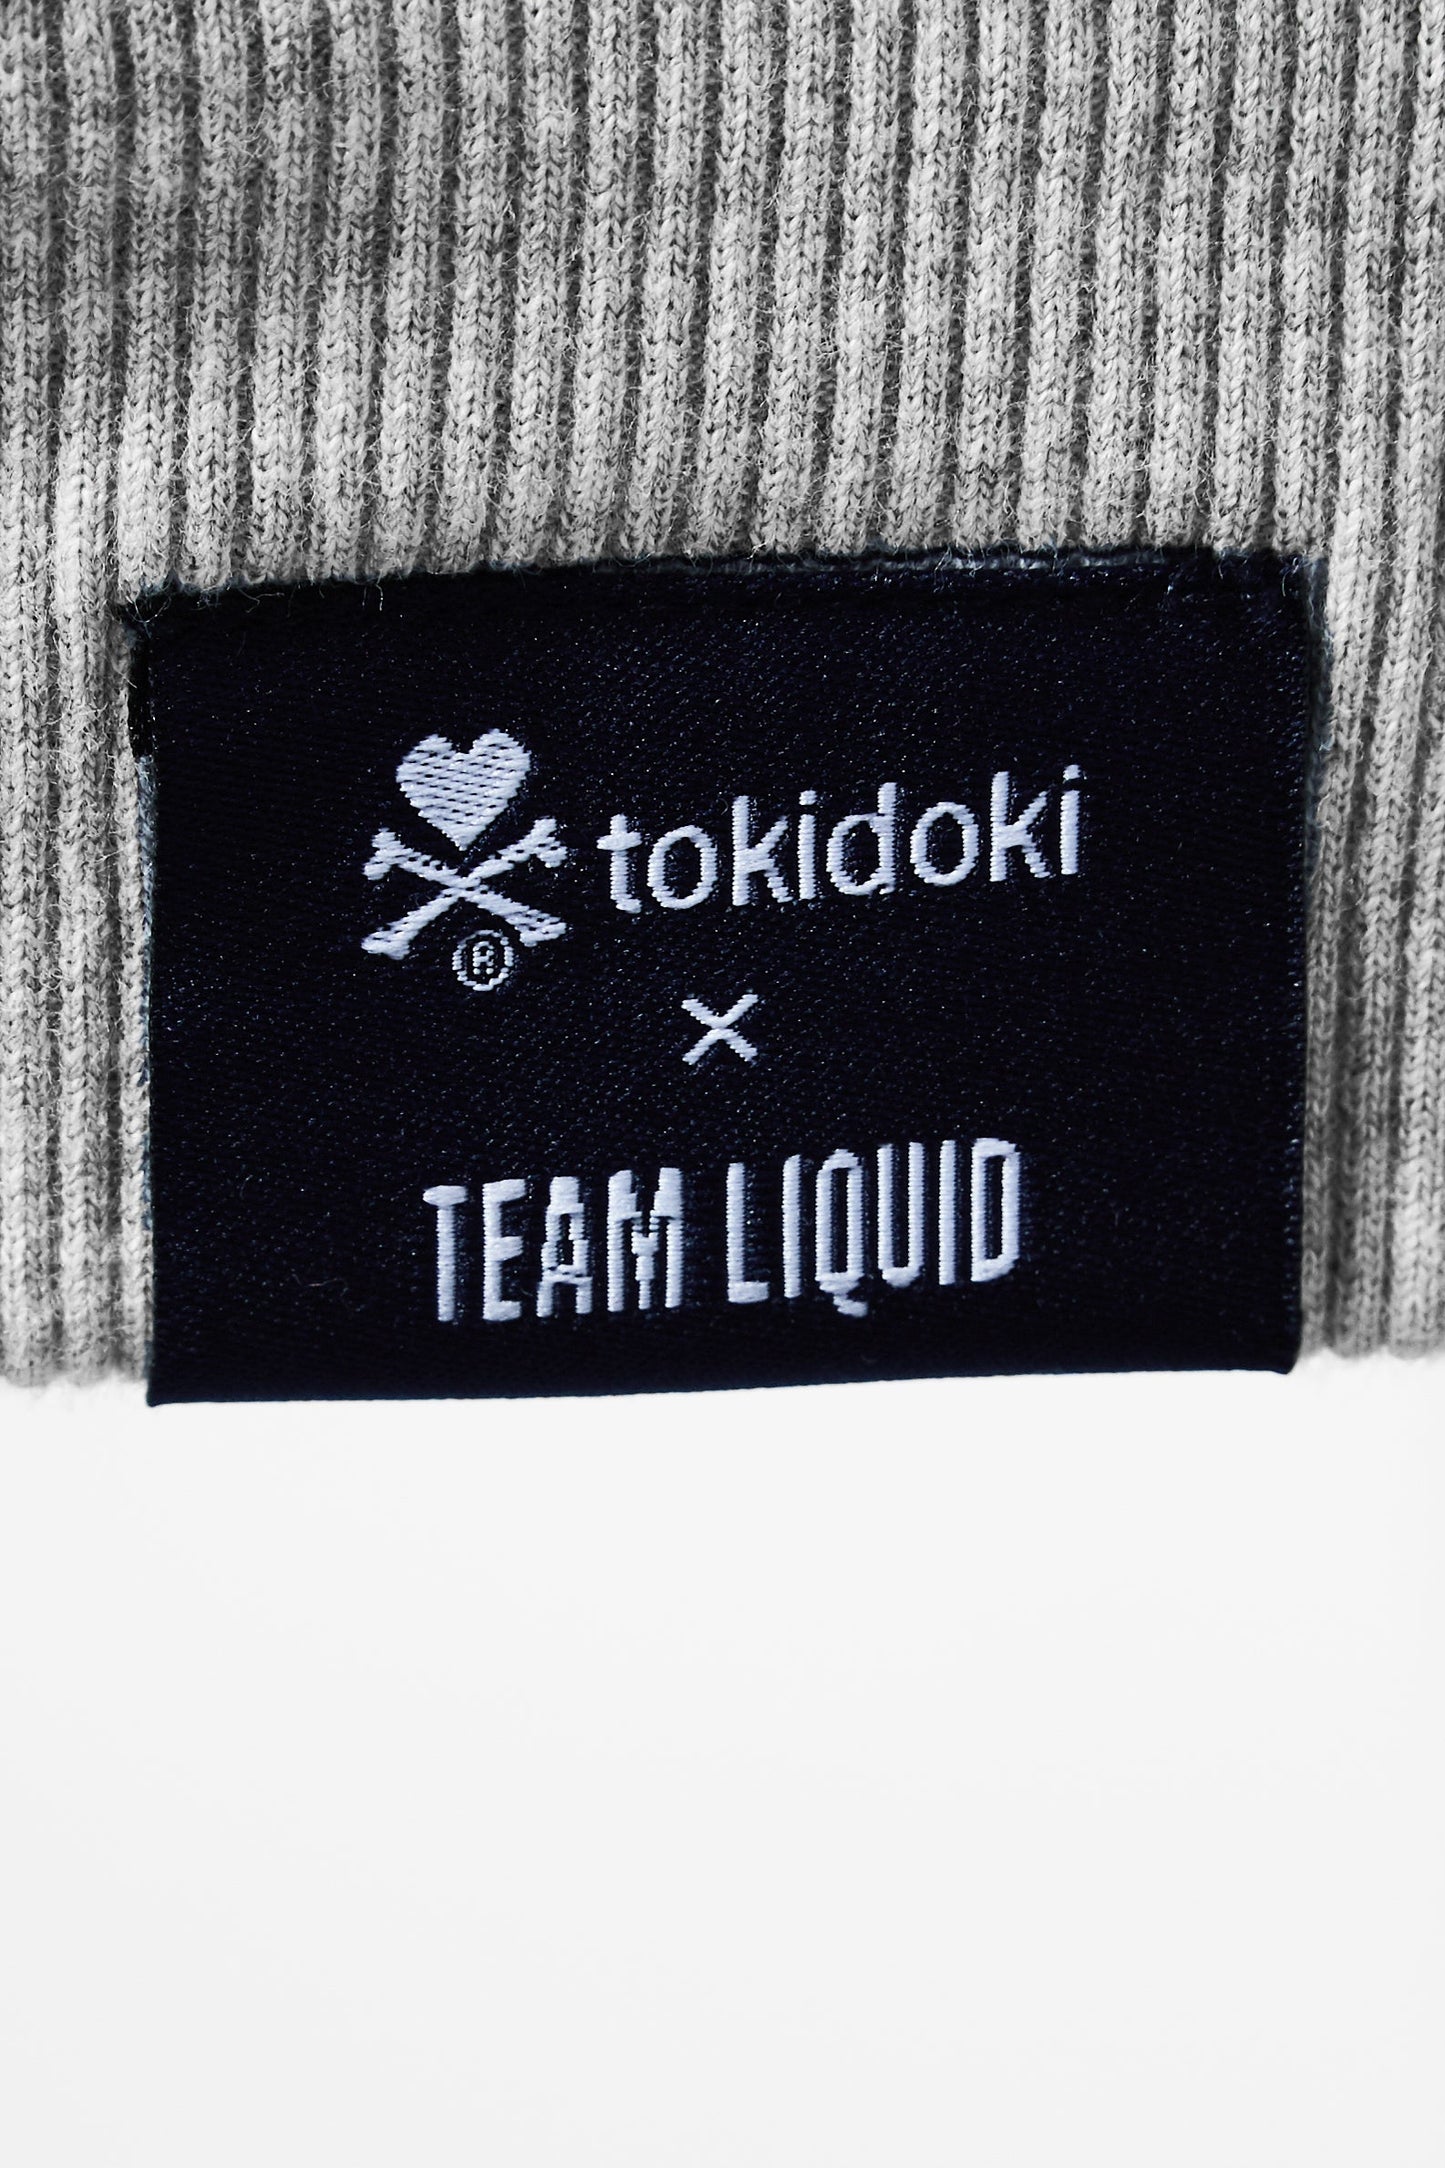 TOKIDOKI x LIQUID DRAGON GAMERS SWEATSHIRT - GREY HEATHER - Team Liquid